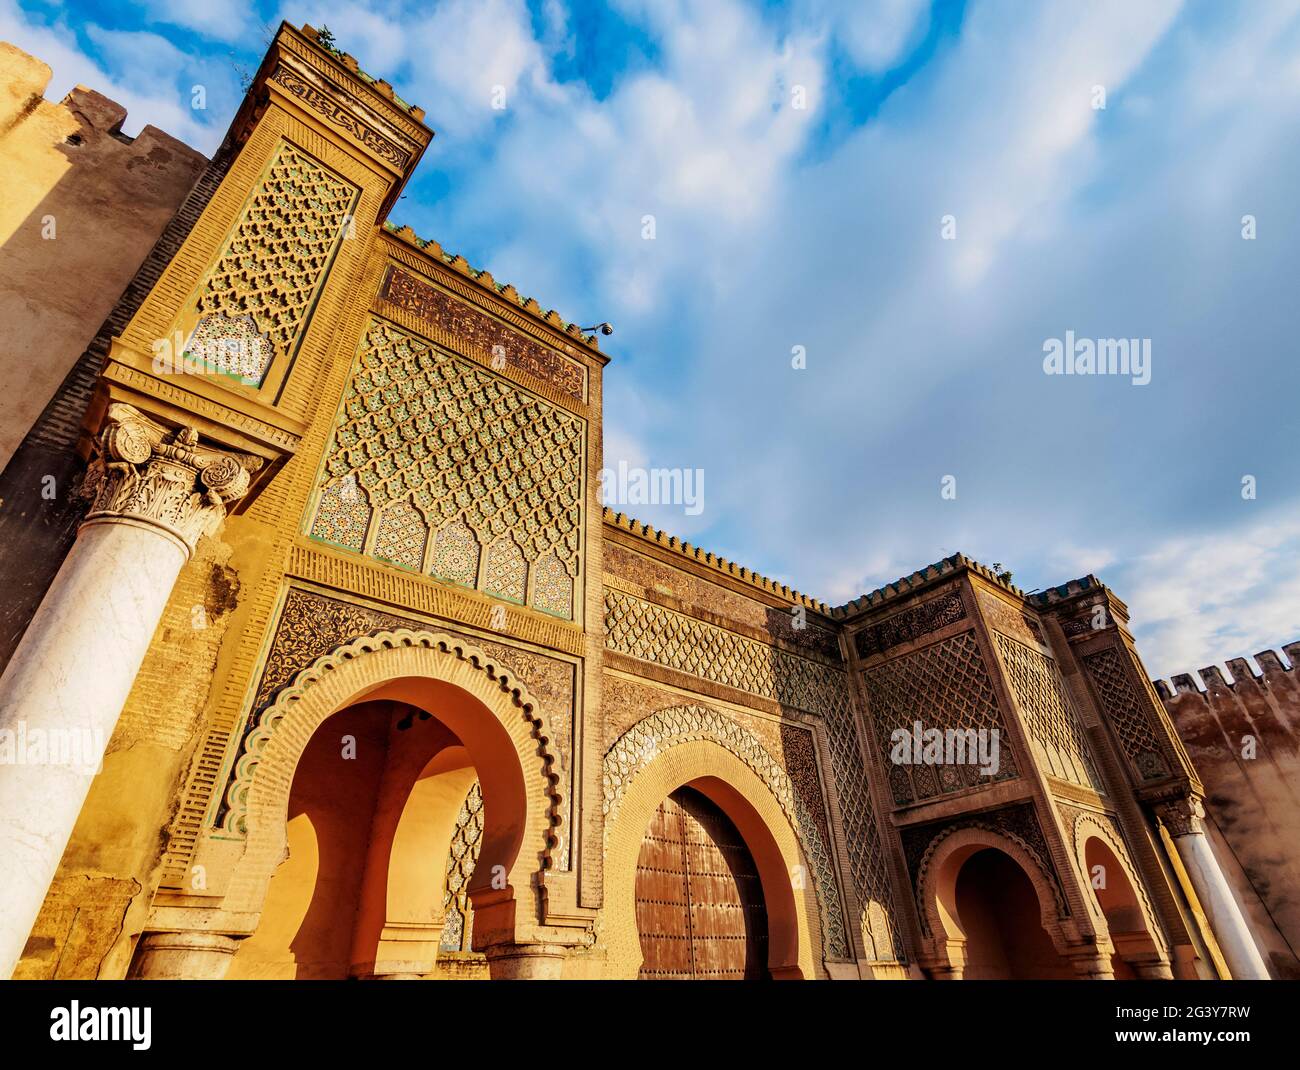 Bab Mansur or Bab Mansour, gate of the Old Medina, Meknes, Fez-Meknes Region, Morocco Stock Photo